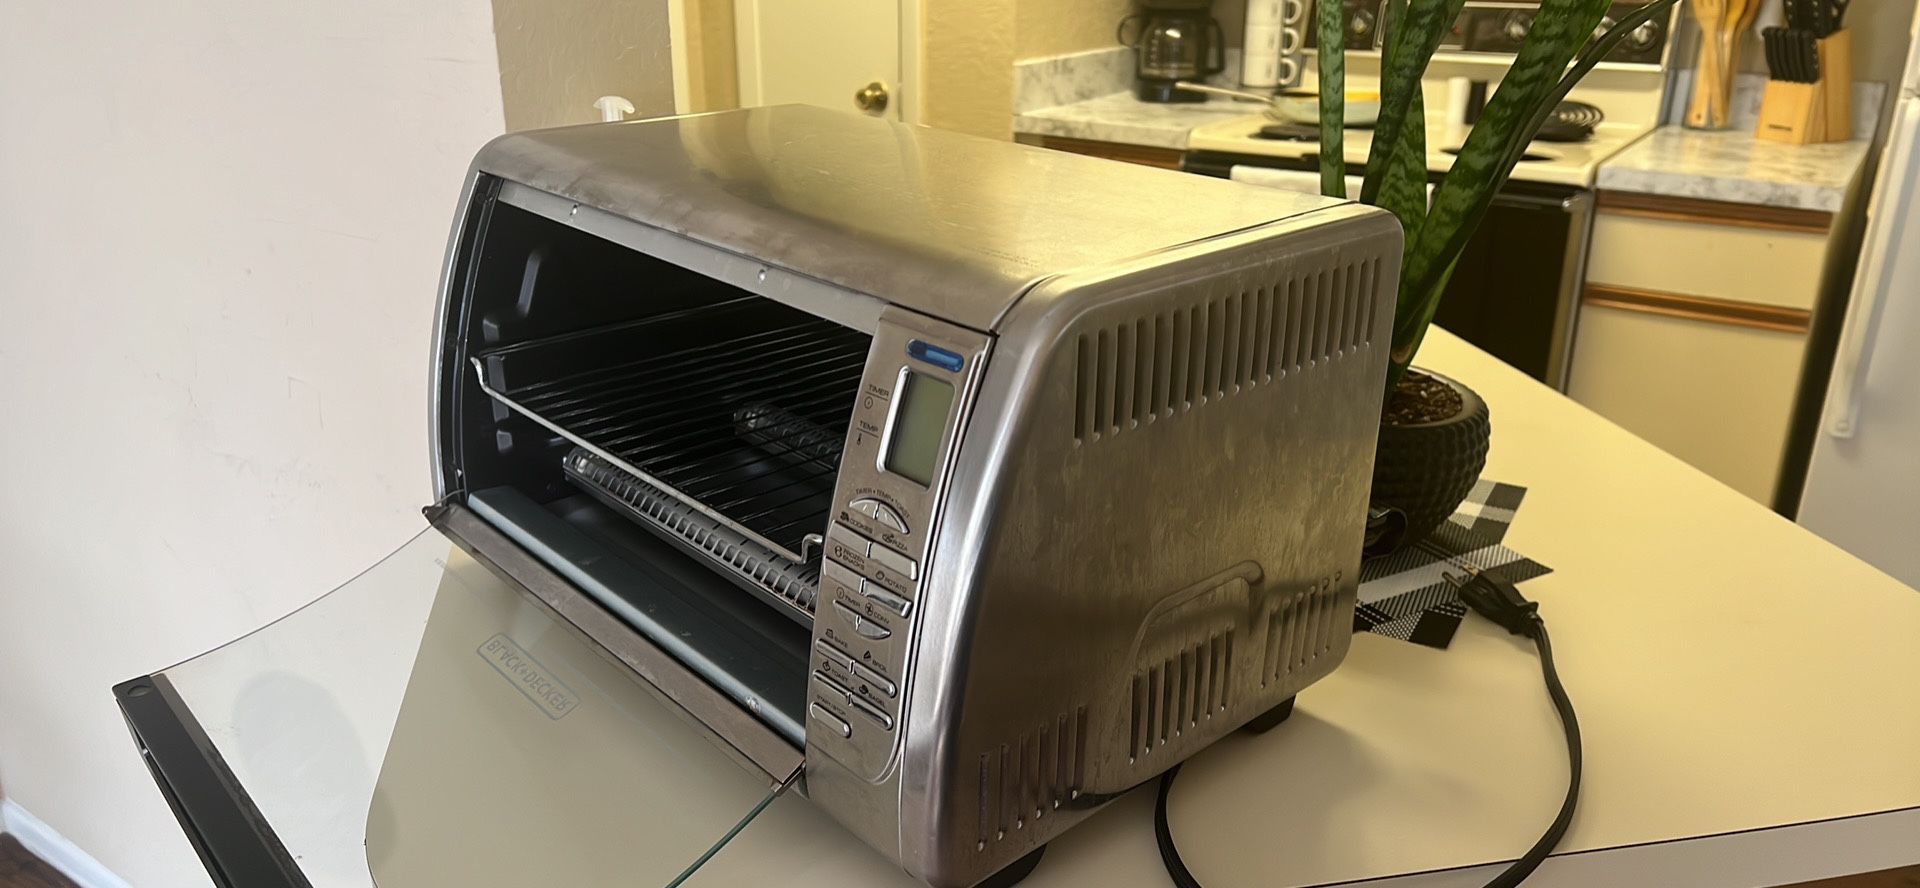 NeweggBusiness - KRUPS FBC213 Black 6-slice Toaster Oven